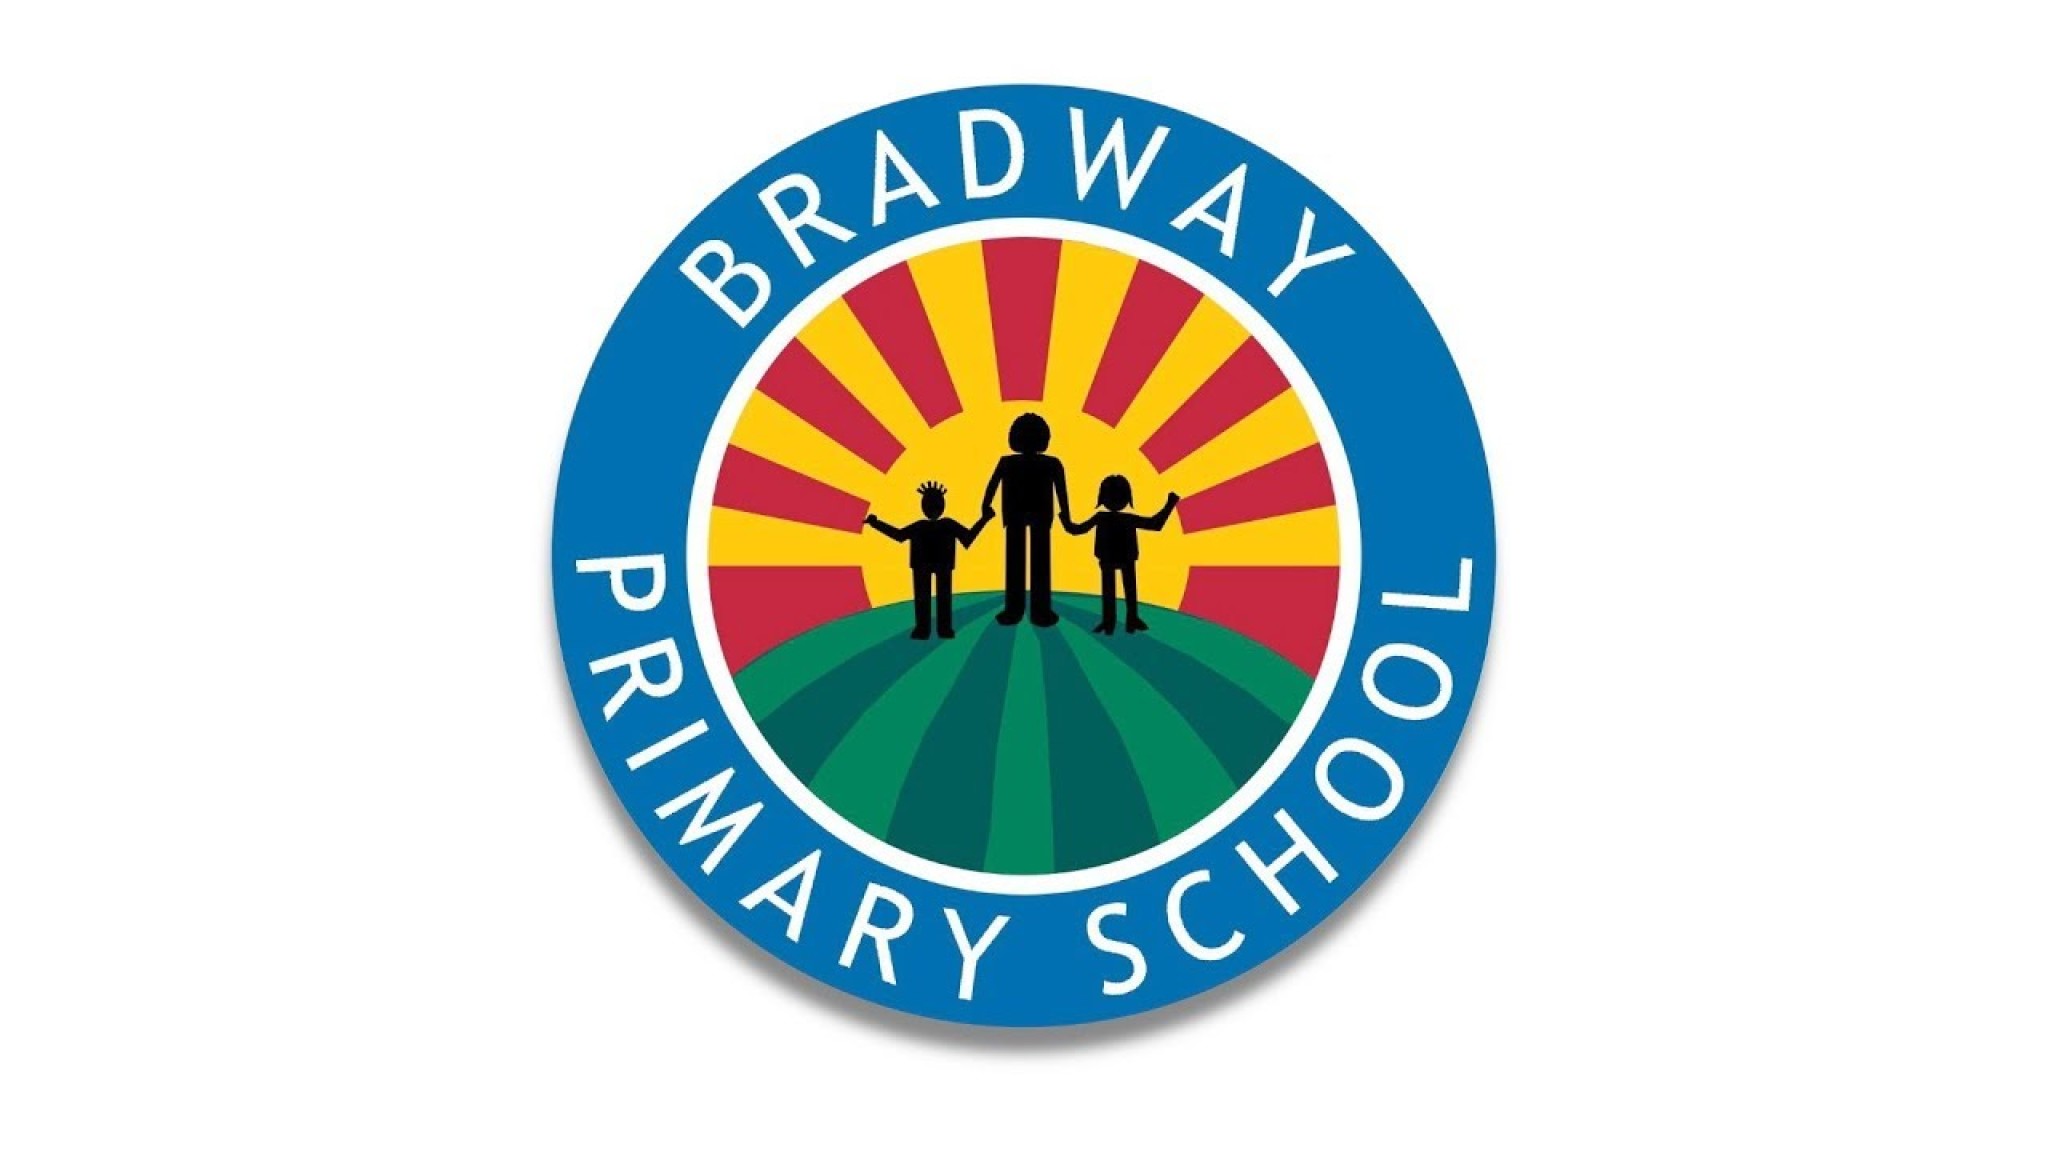 Bradway Primay School.jpg